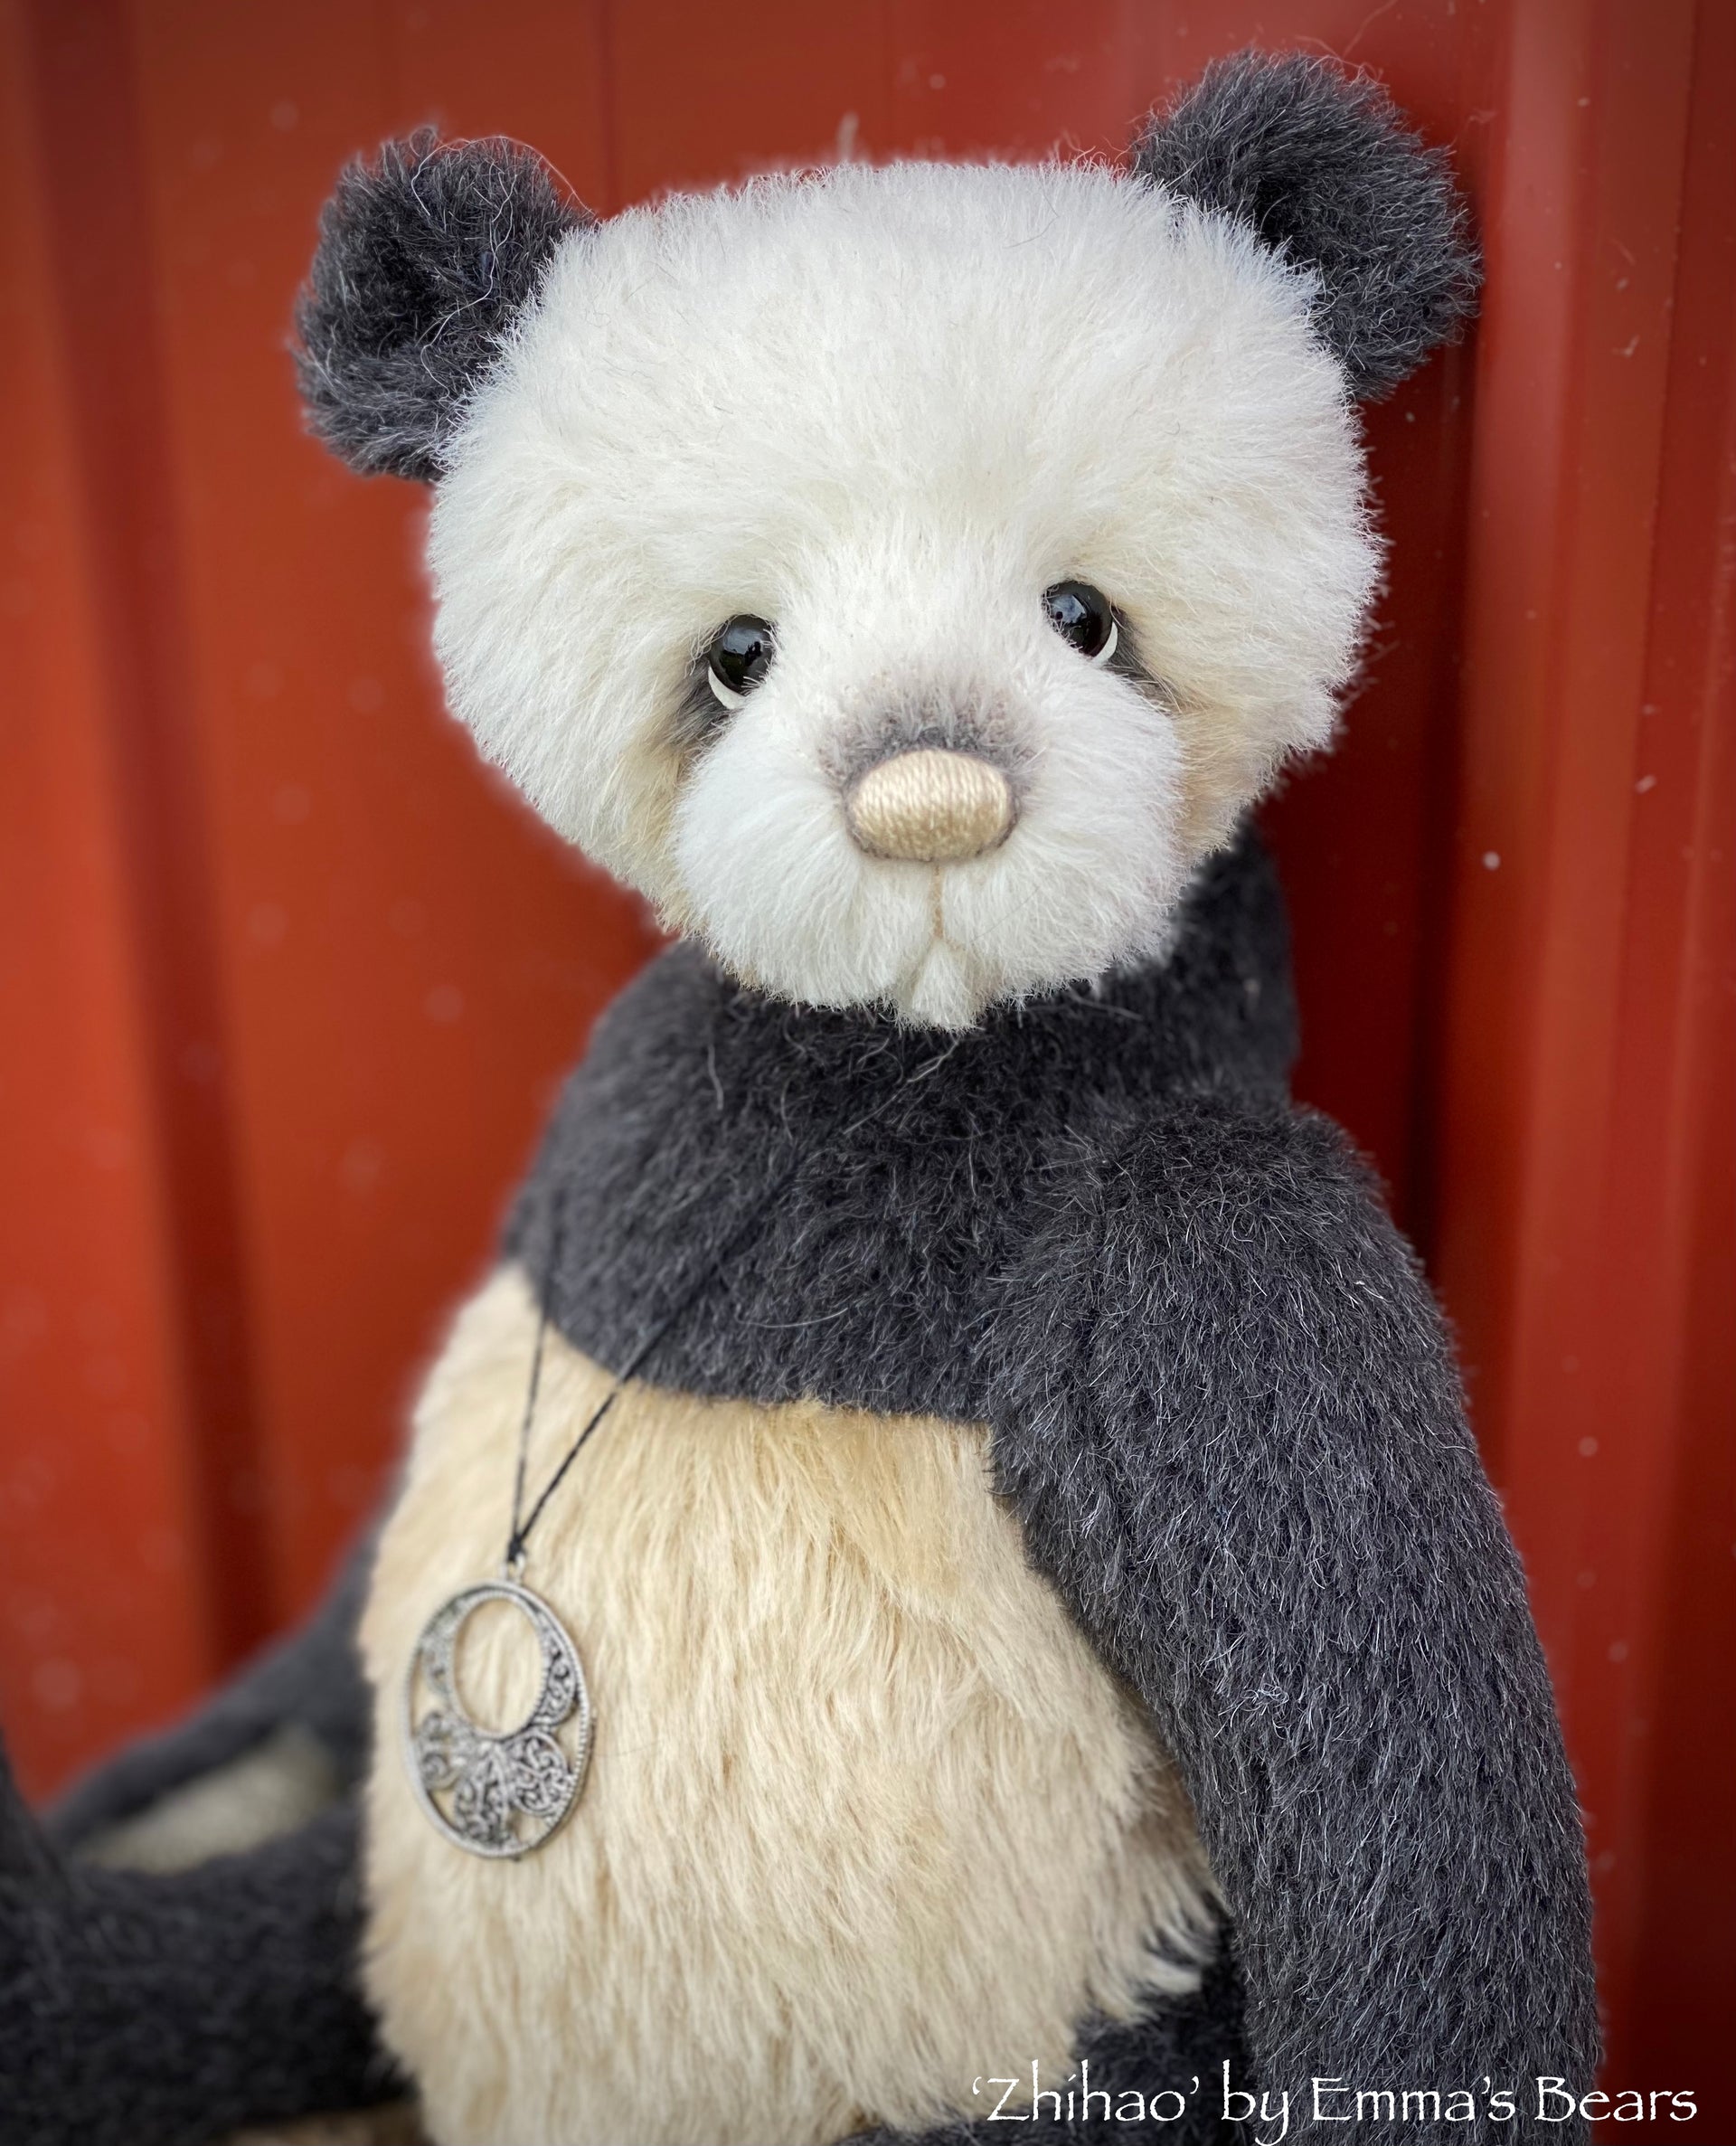 Zhihao - 13" mohair artist panda bear  - OOAK by Emma's Bears